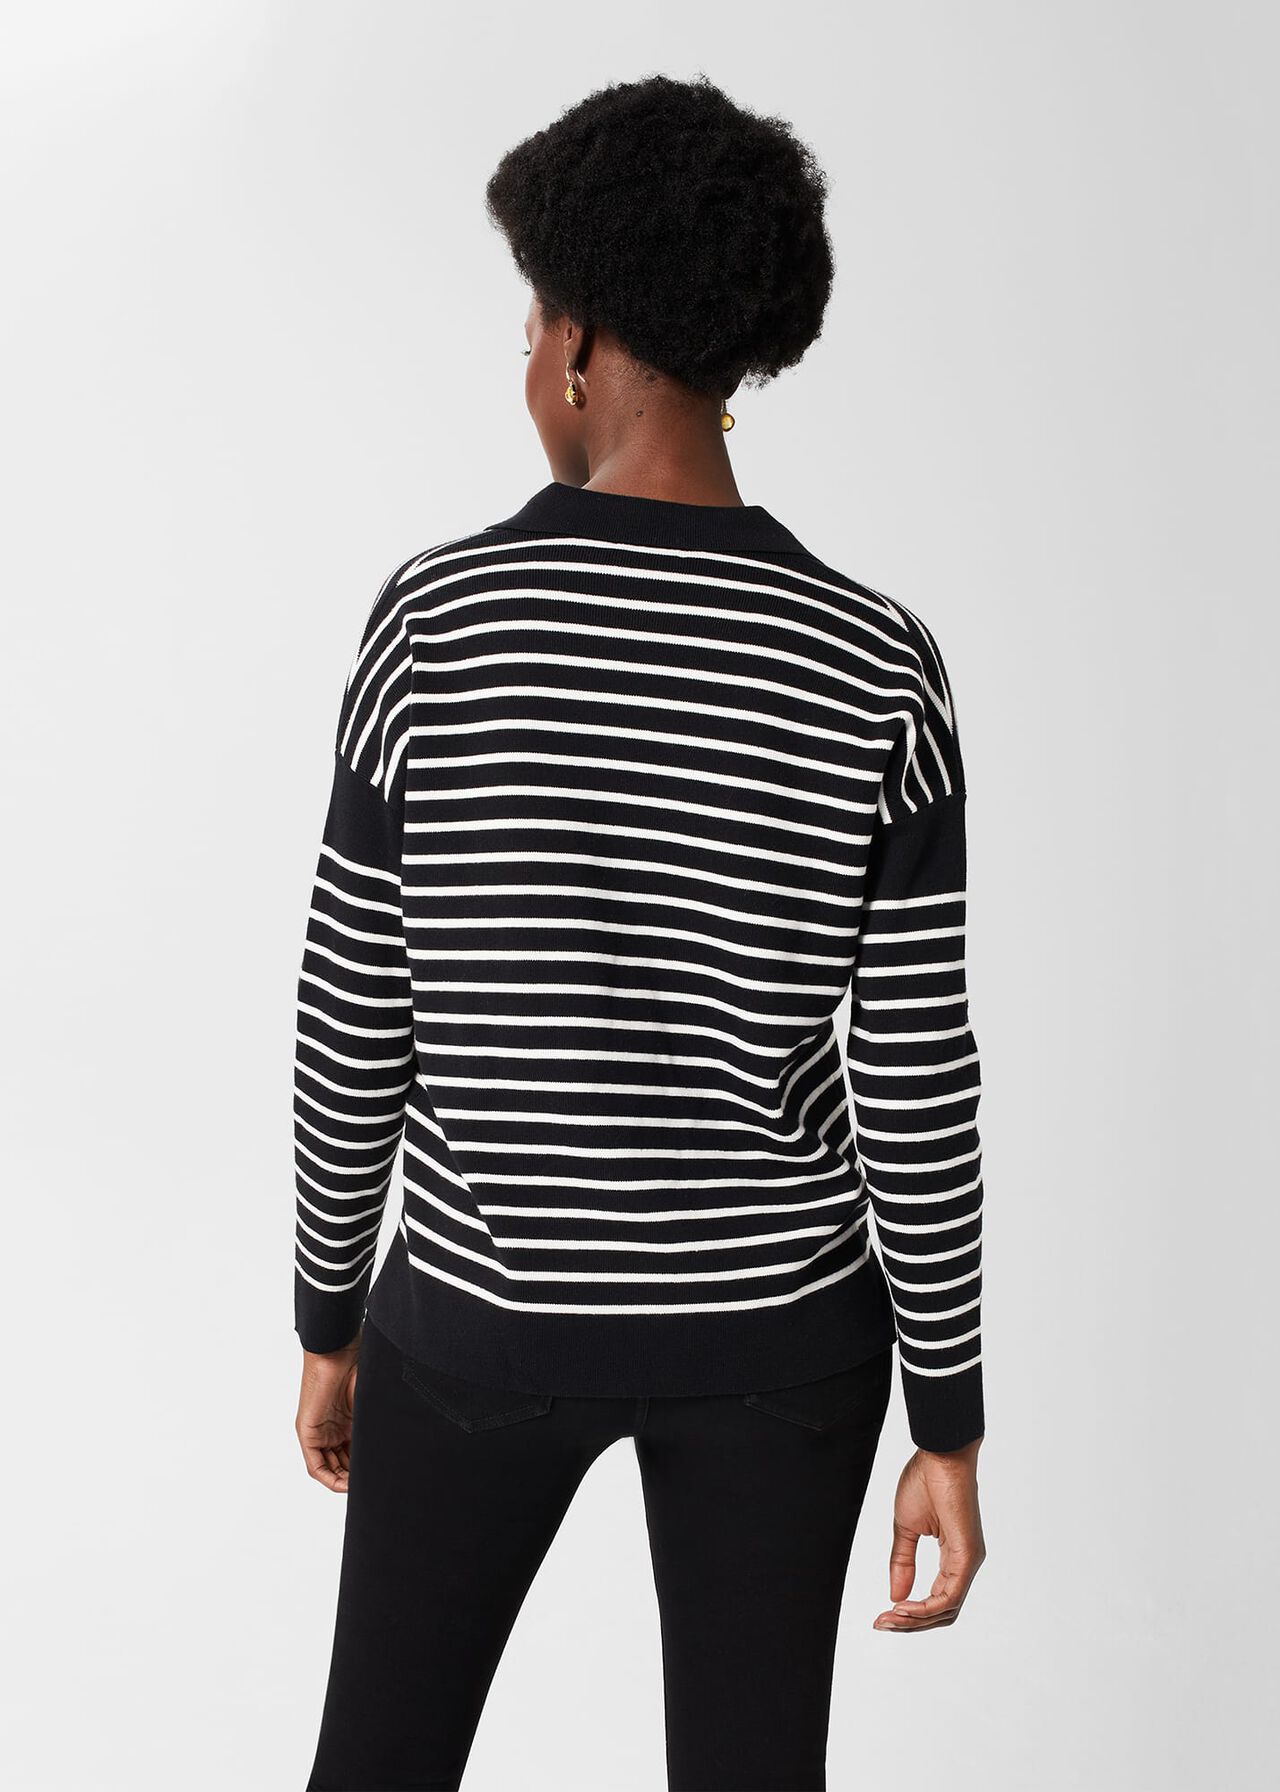 Karissa Cotton Striped Sweater, Black Ivory, hi-res